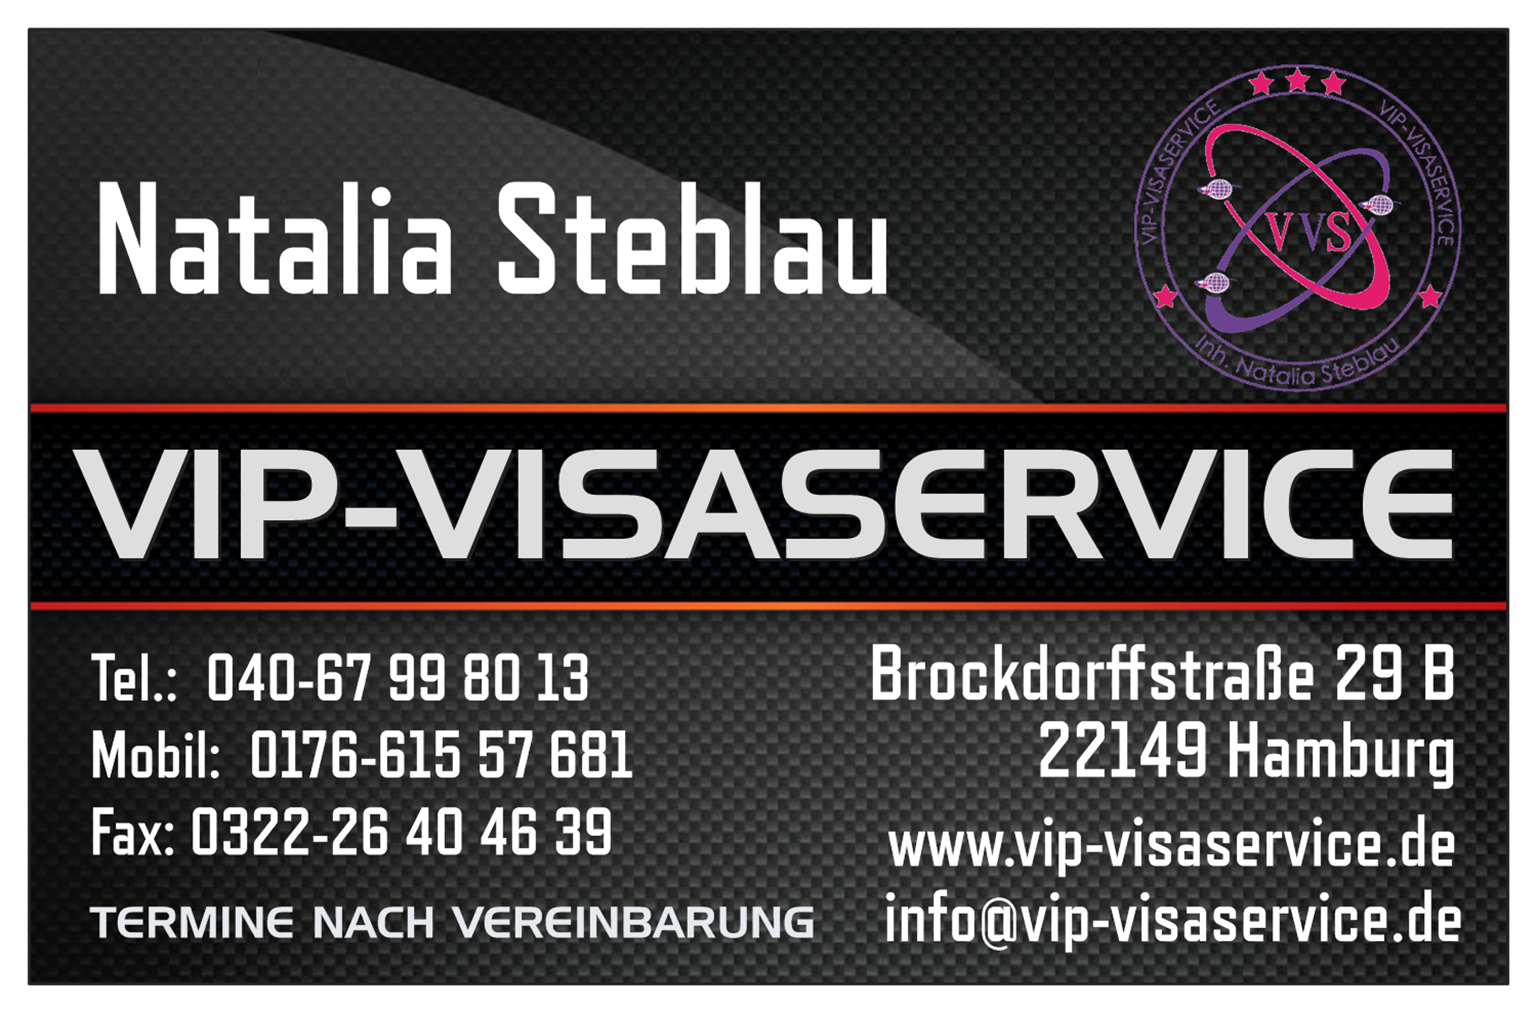 Bild 2 VIP-Visaservice, Inh. Natalia Steblau in Hamburg